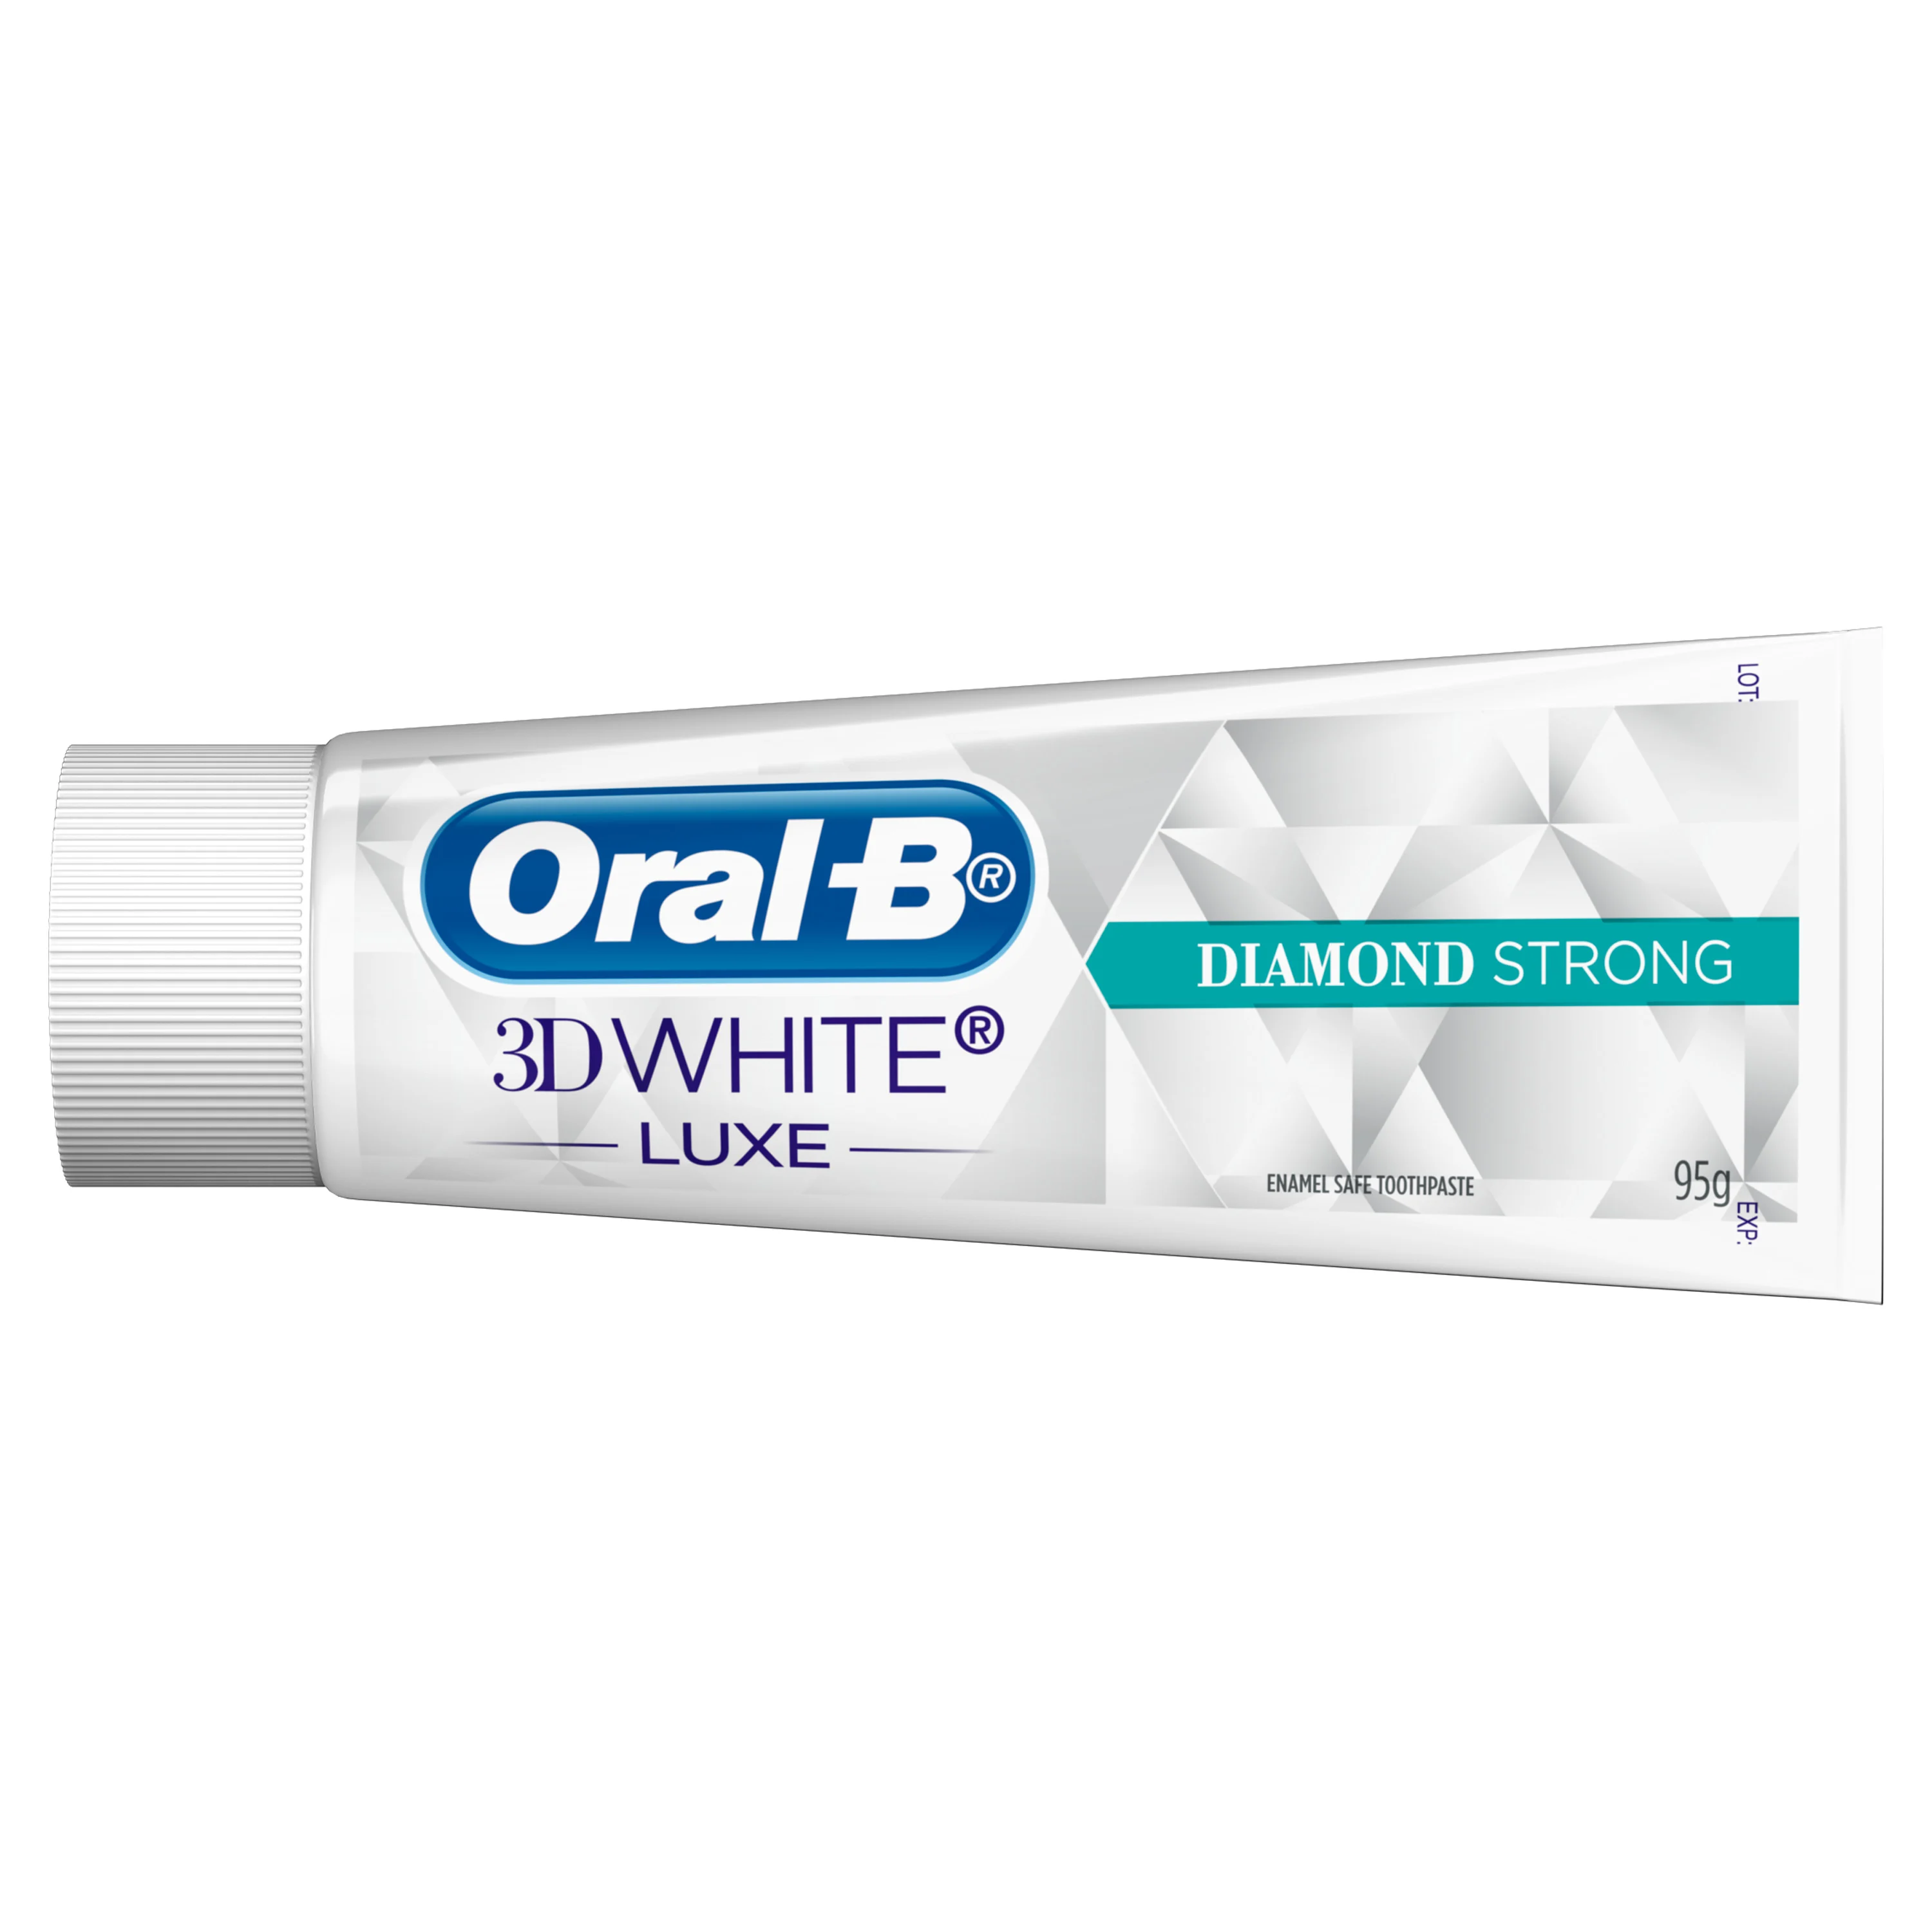 Oral-B 3DWhite Luxe Diamond Strong Toothpaste 